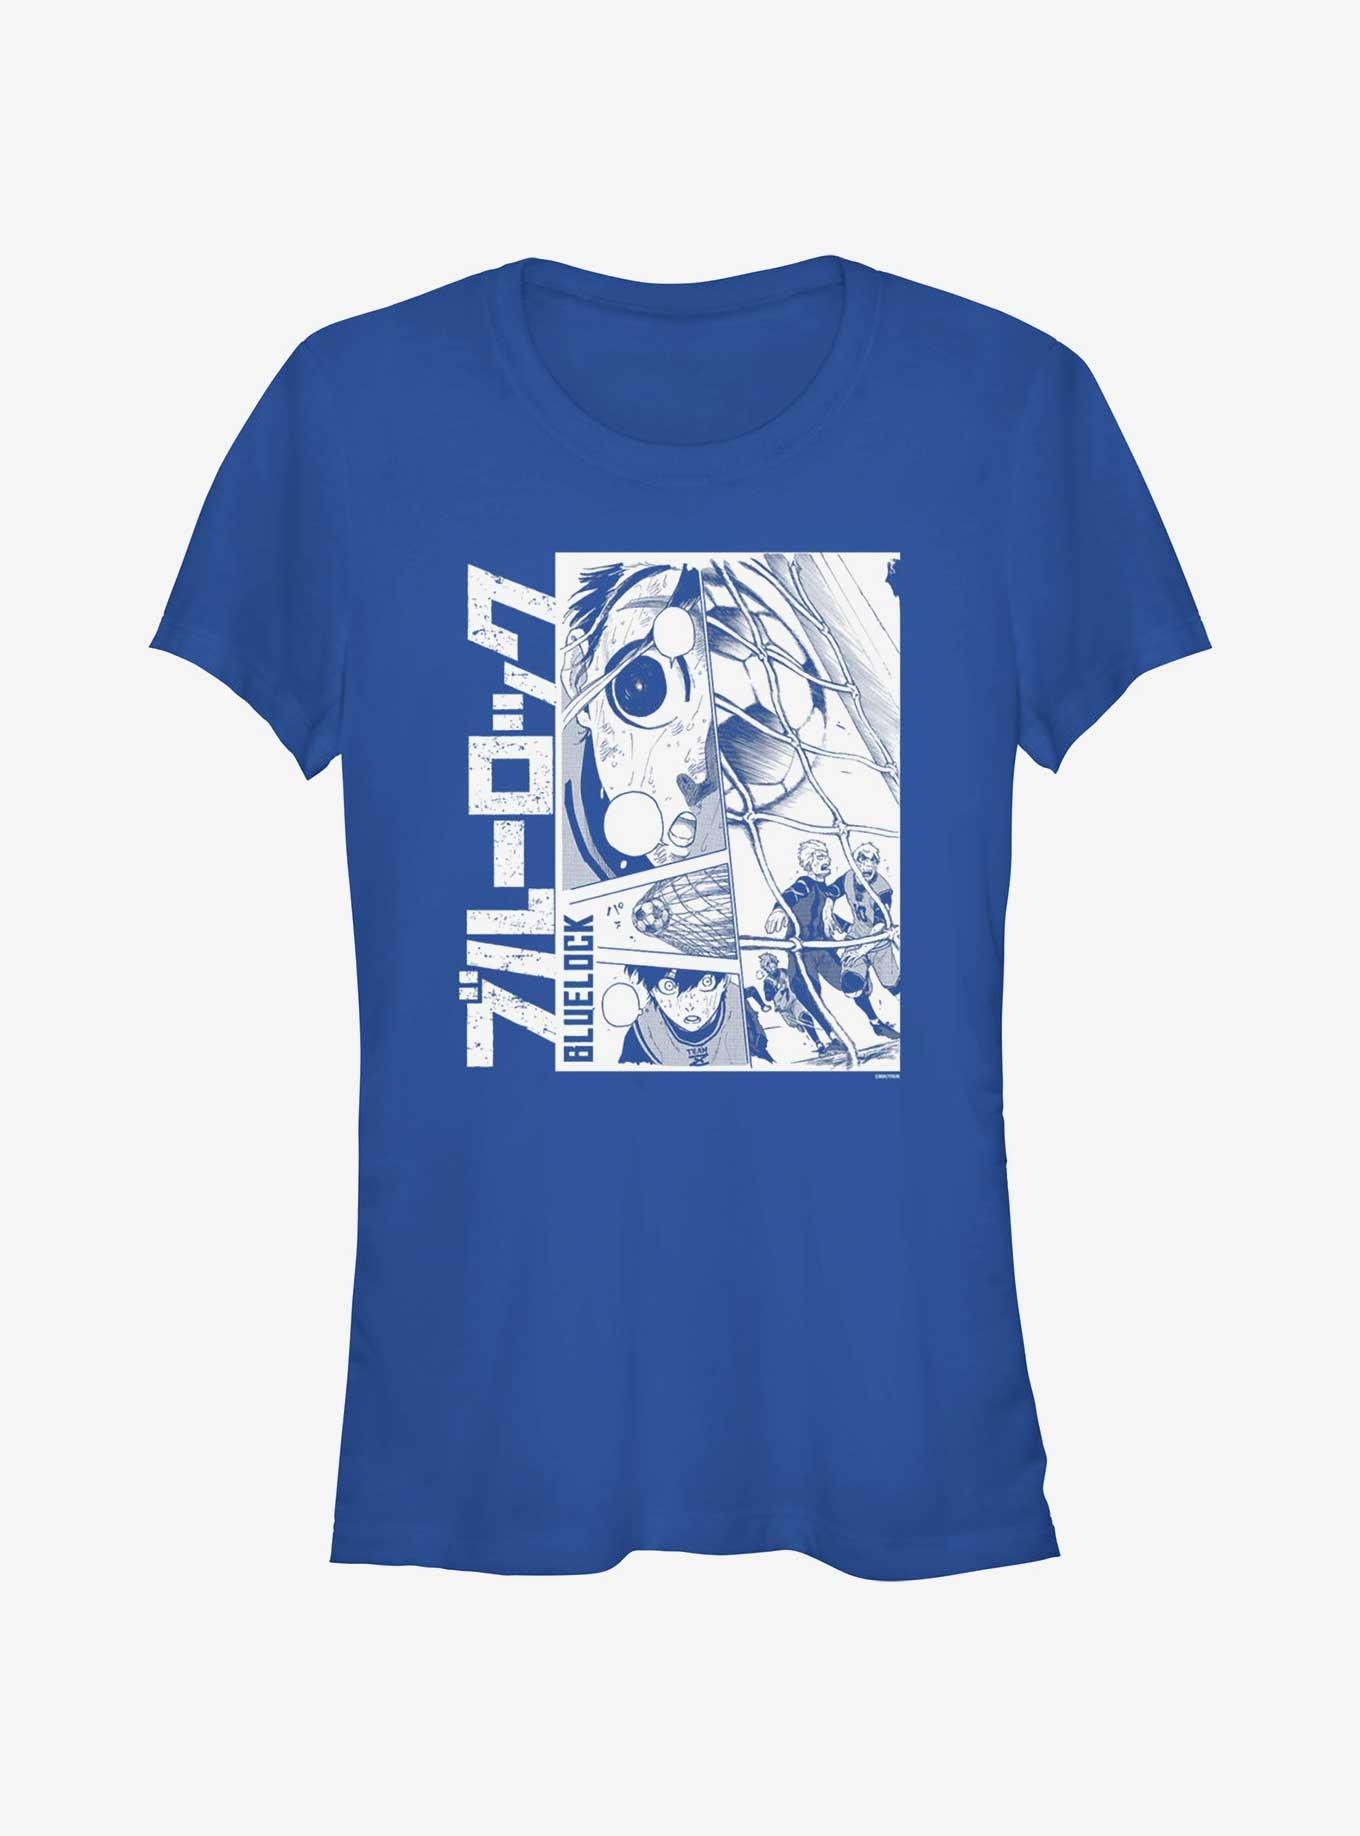 Blue Lock Yoichi Isagi Forward Kick Poster Girls T-Shirt